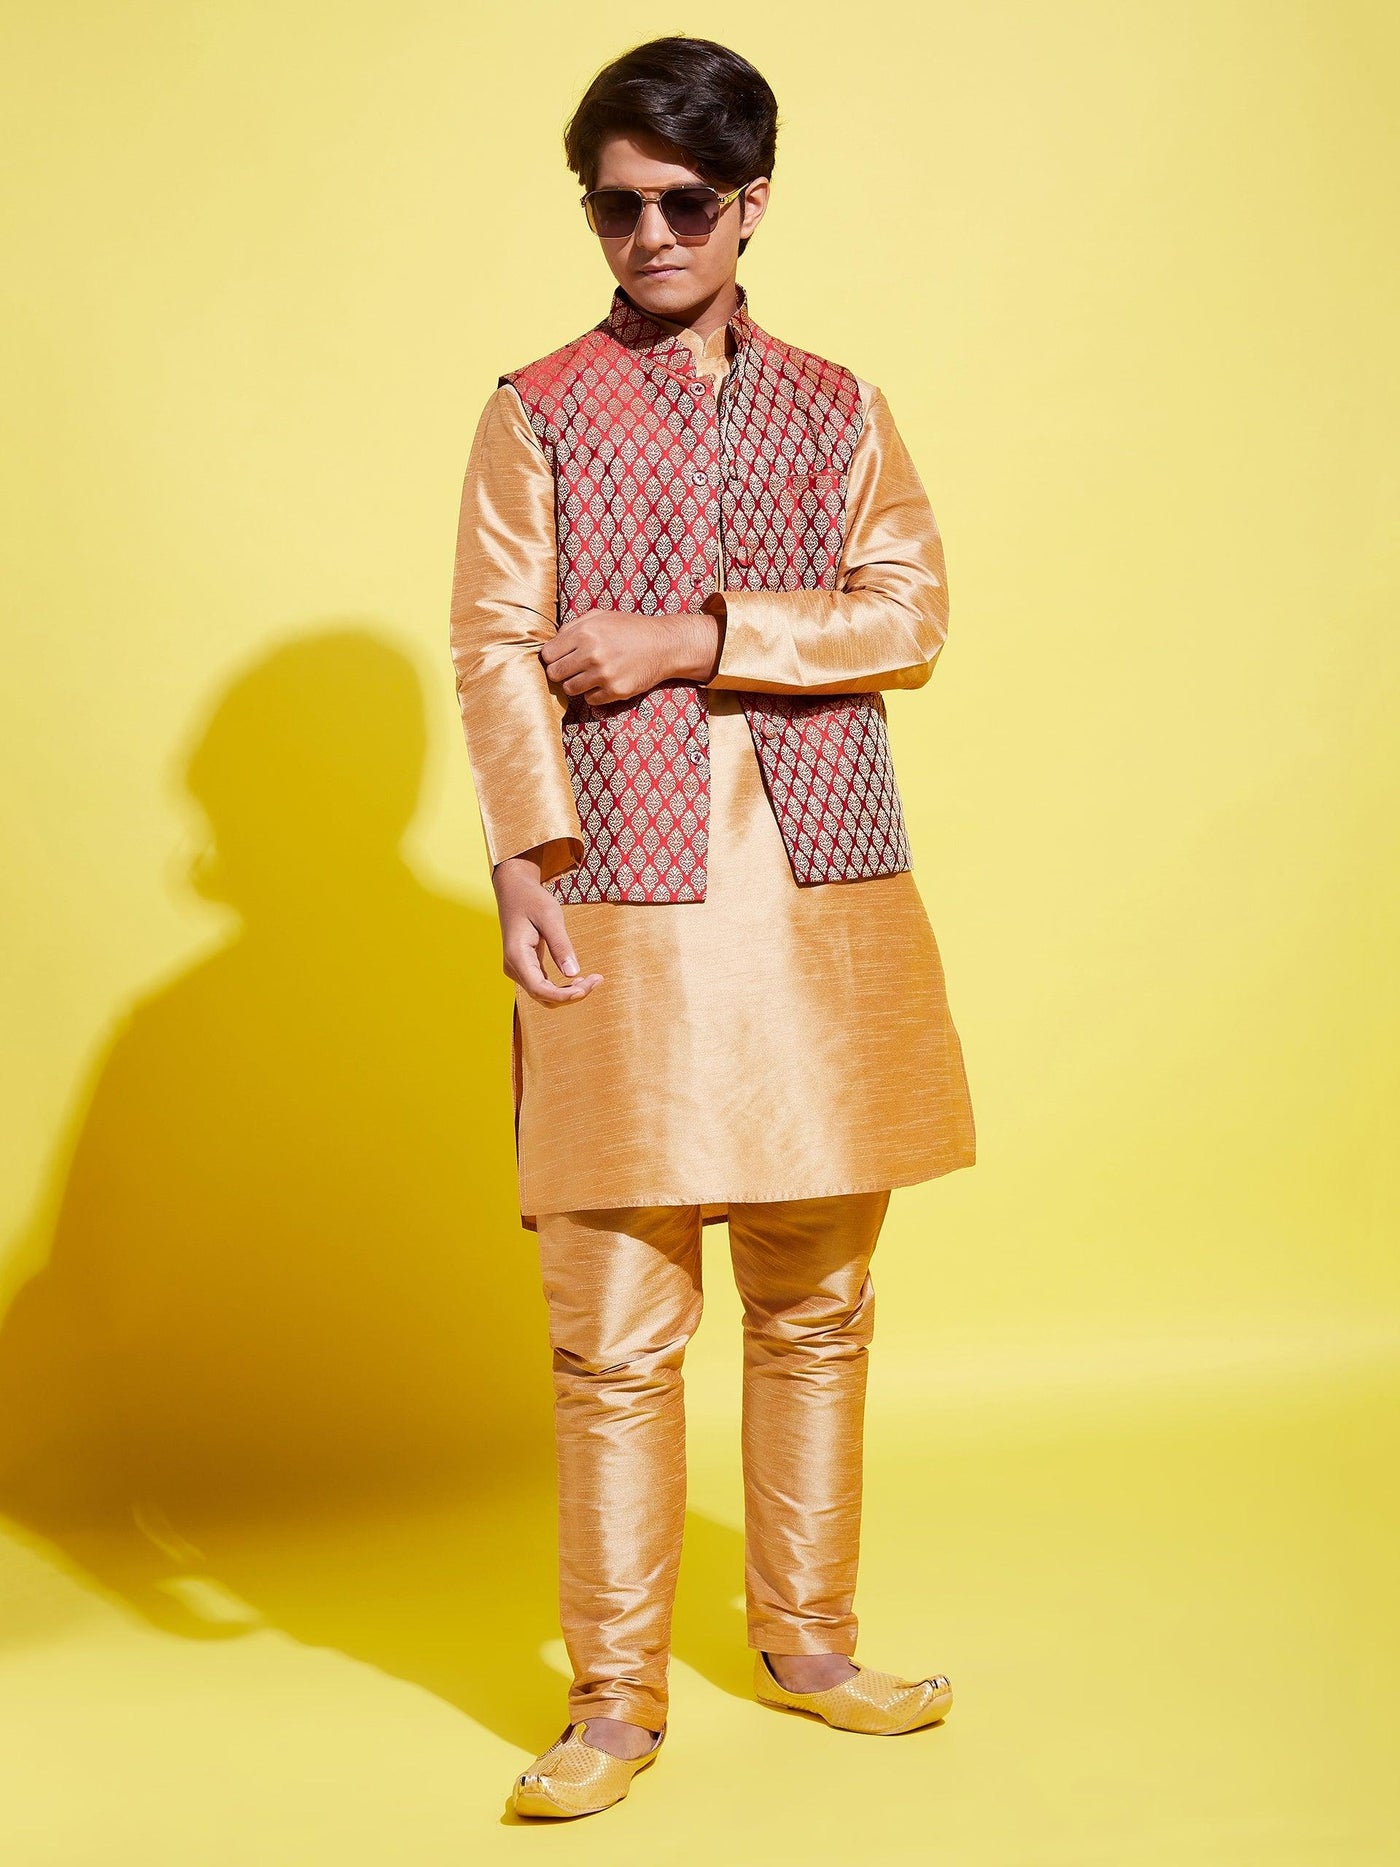 YUVA BY VASTRAMAY Boys' Maroon Woven Design Silk Blend Nehru Jackets - qivii